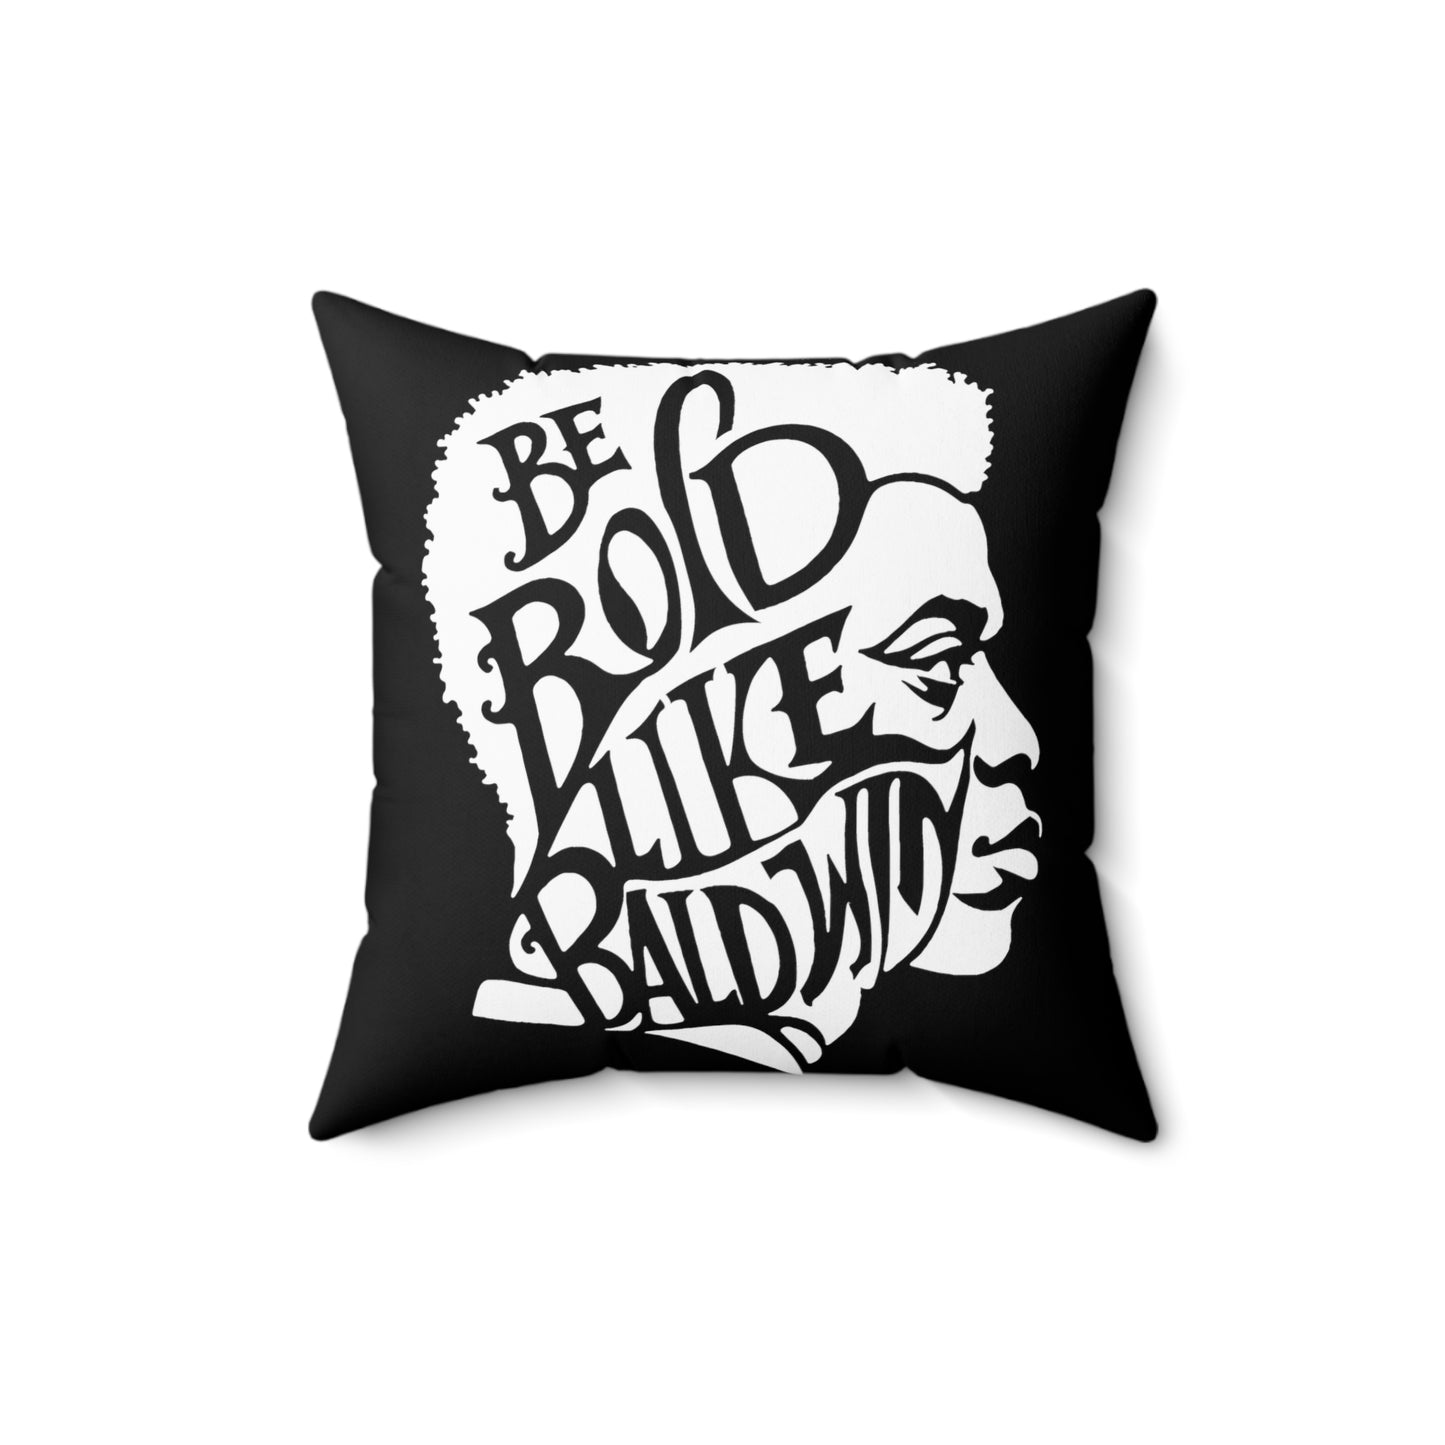 James Baldwin "Be Bold" Pillow - Black